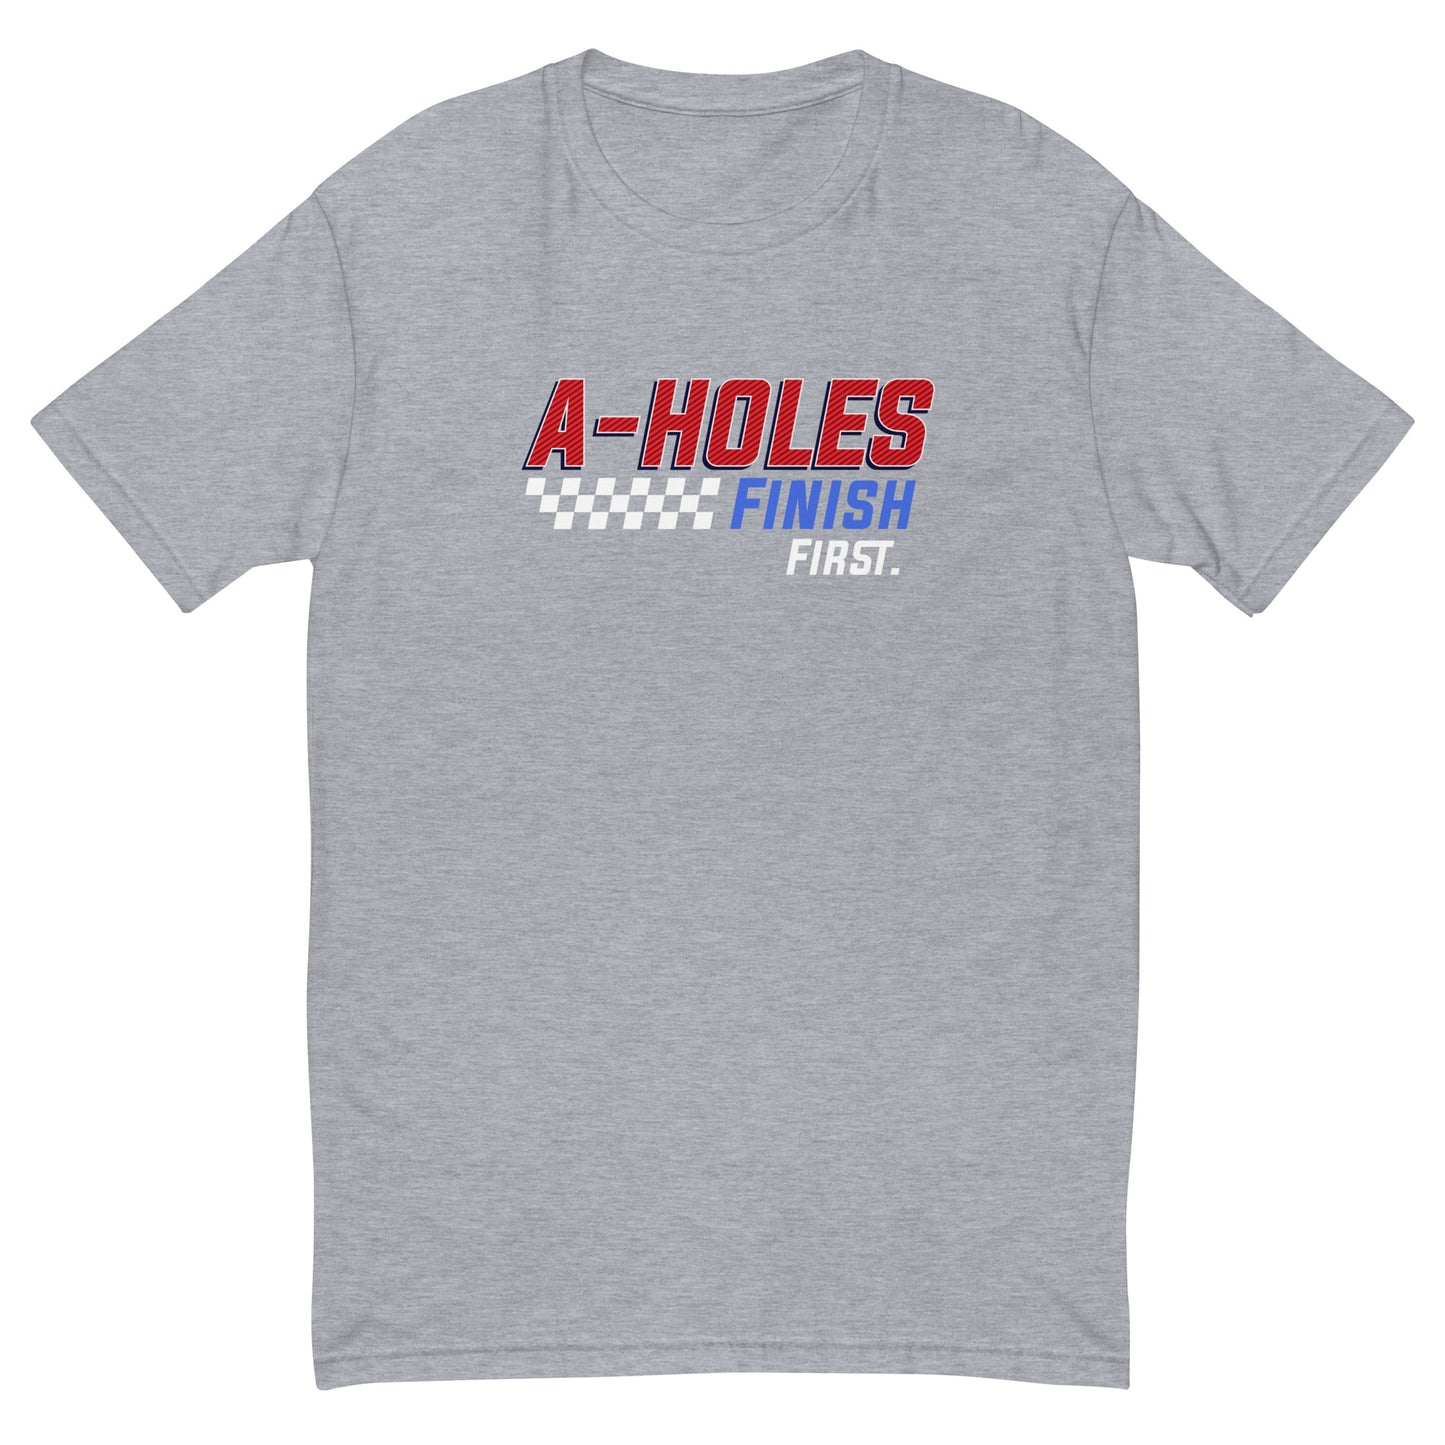 A-Hole "First Place" Short Sleeve T-shirt